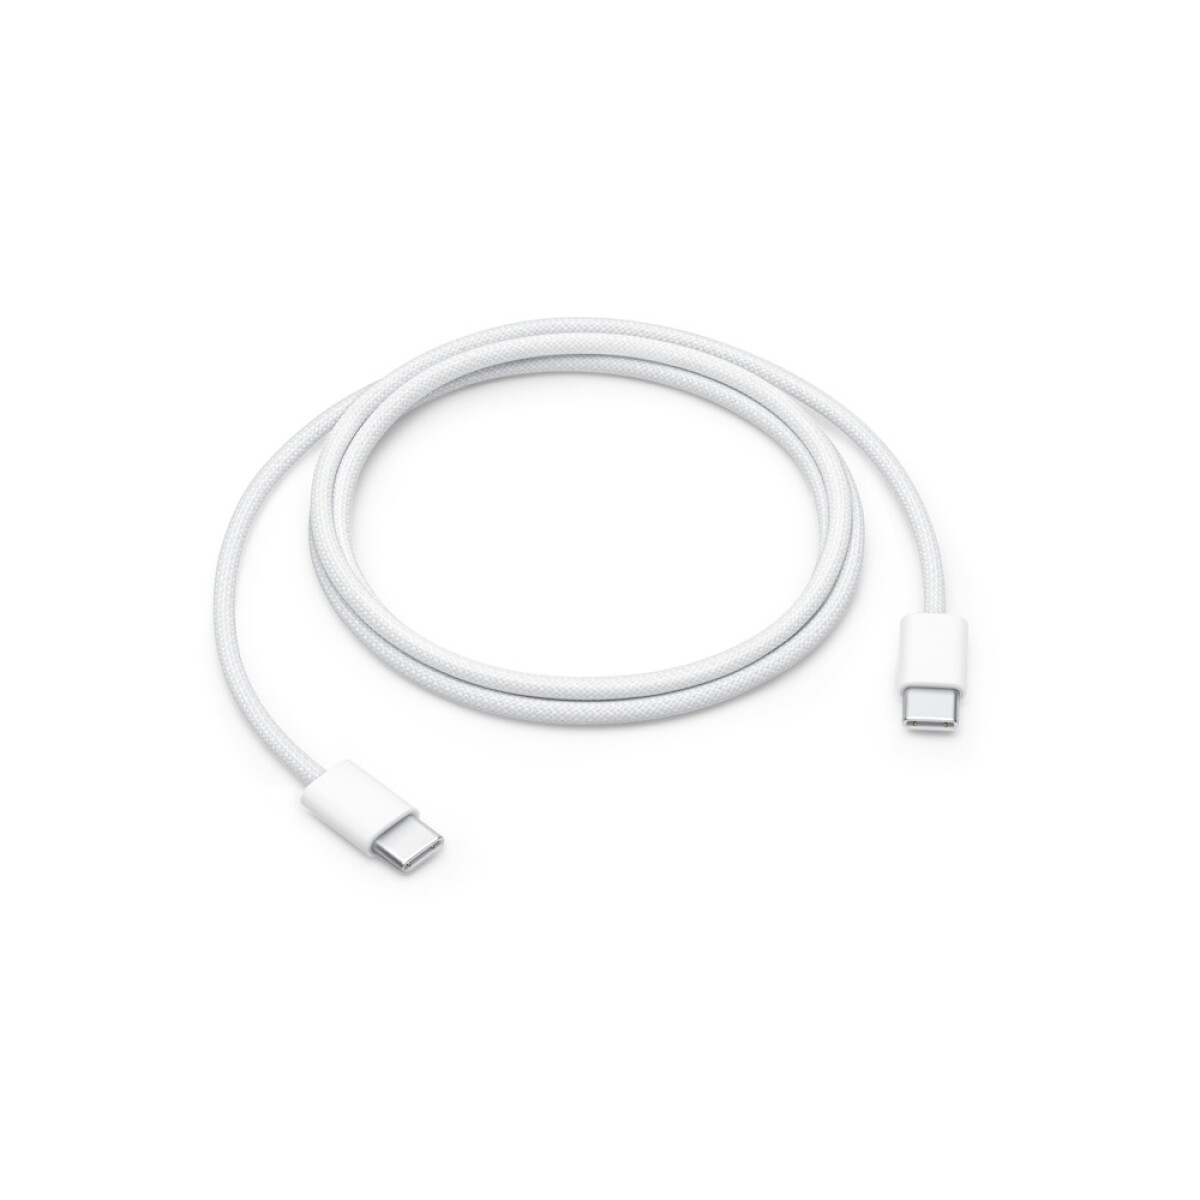 Cable de carga Apple USB-C hasta 60W Reforzado en tela (1 metro) 